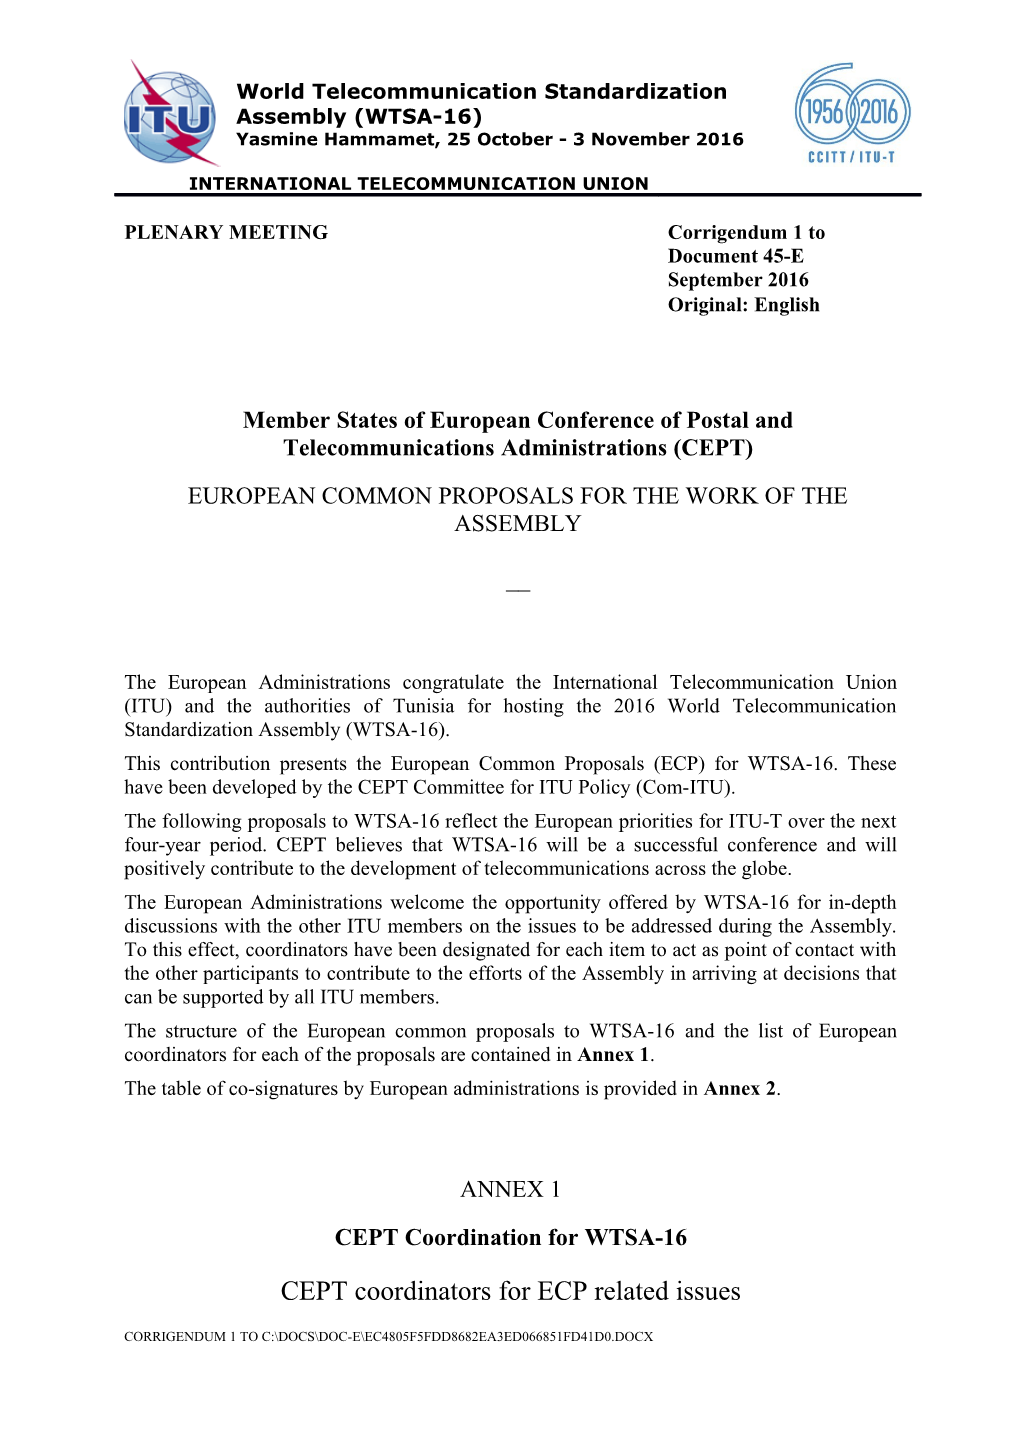 The European Administrationscongratulate the International Telecommunication Union (ITU)